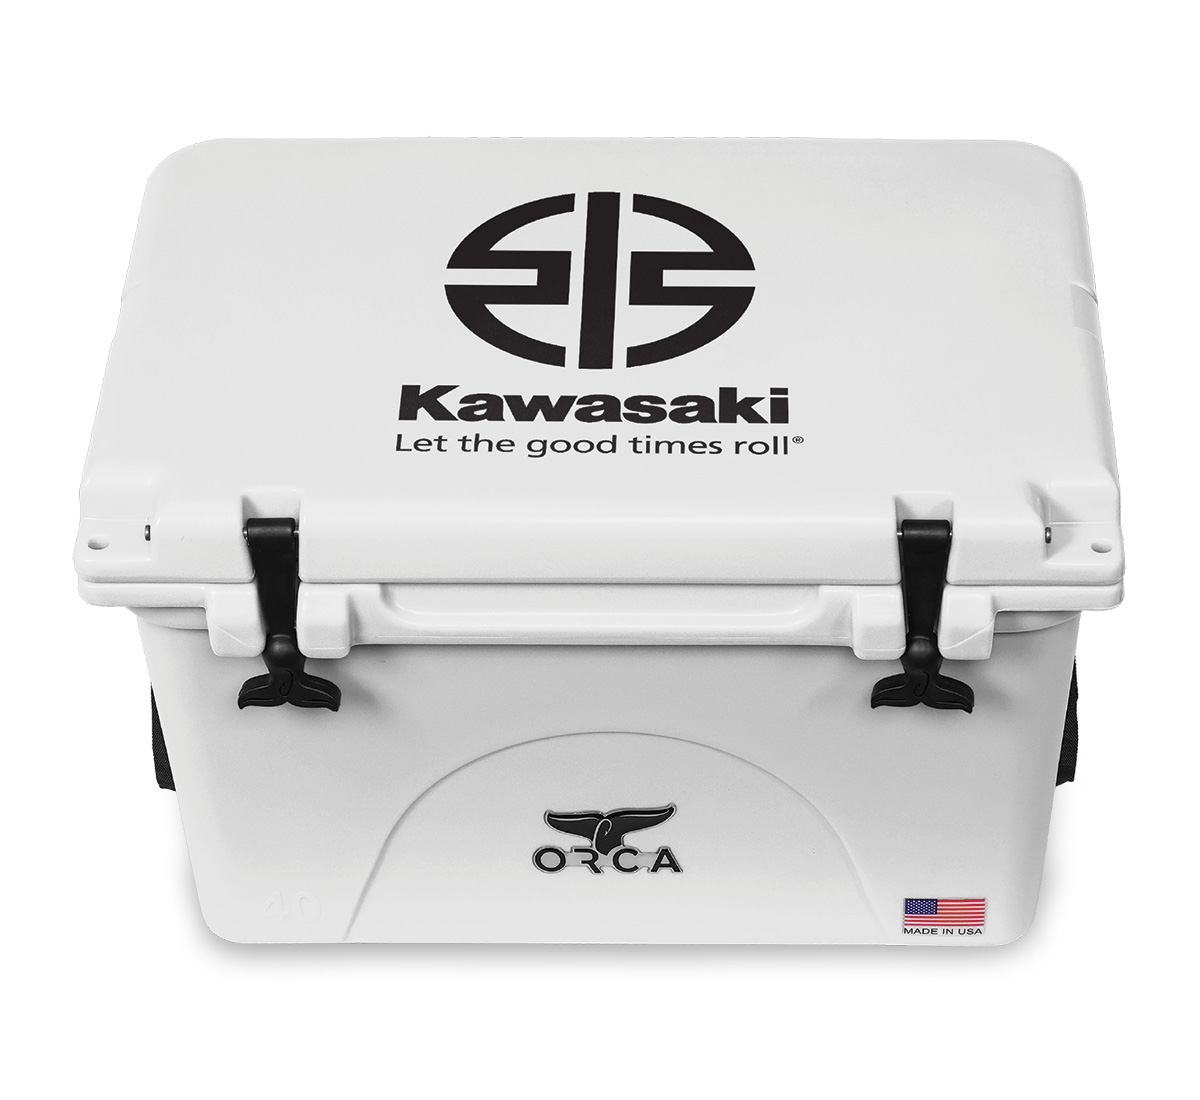 Kawasaki Orca White 40 Quart Cooler